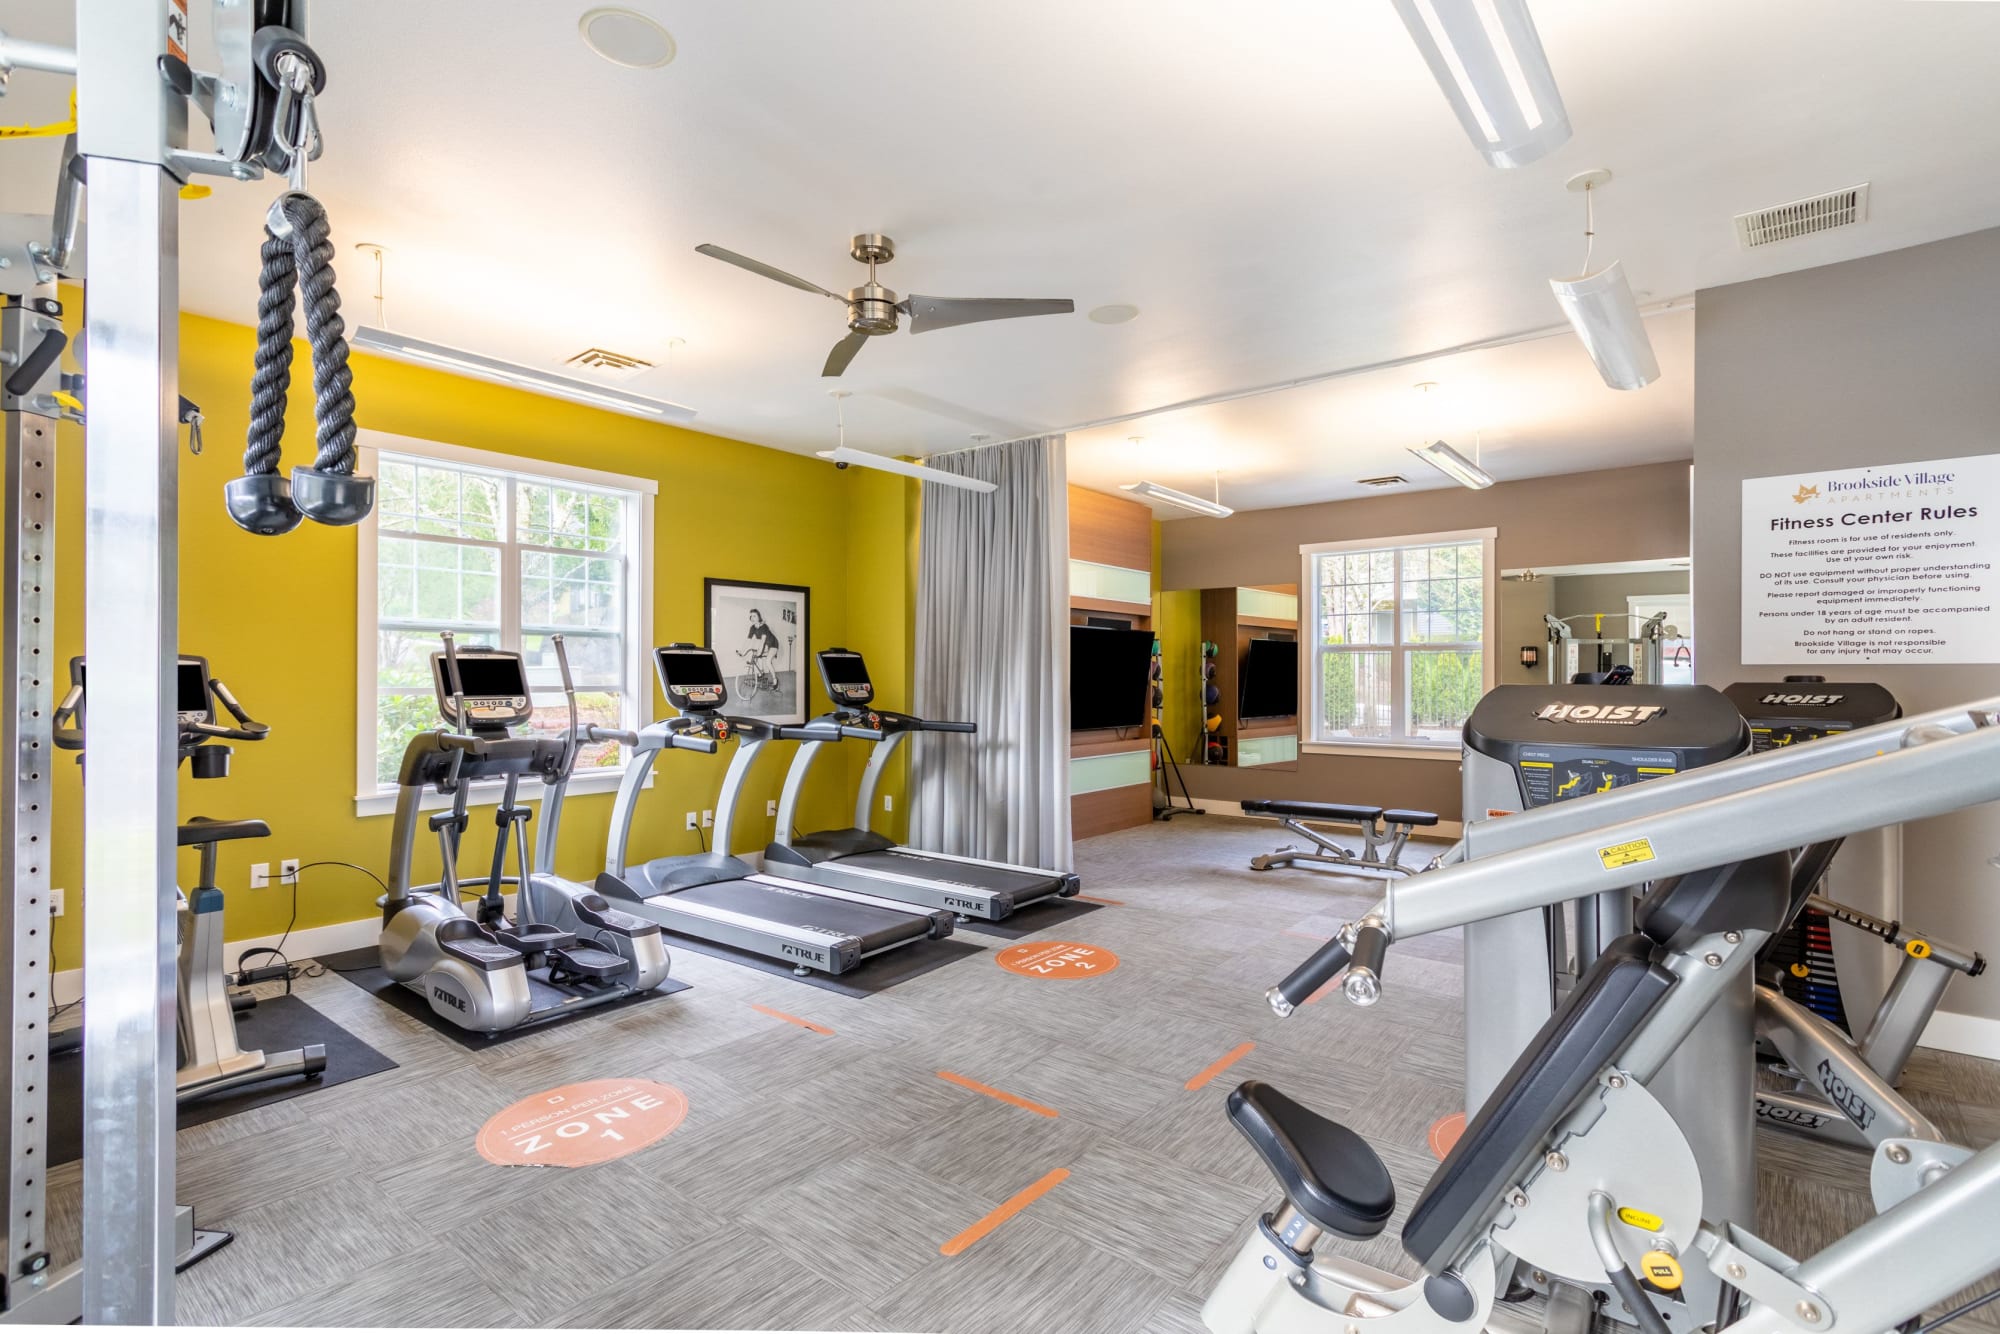 A fitness center with treadmills at Brookside Village in Auburn, Washington